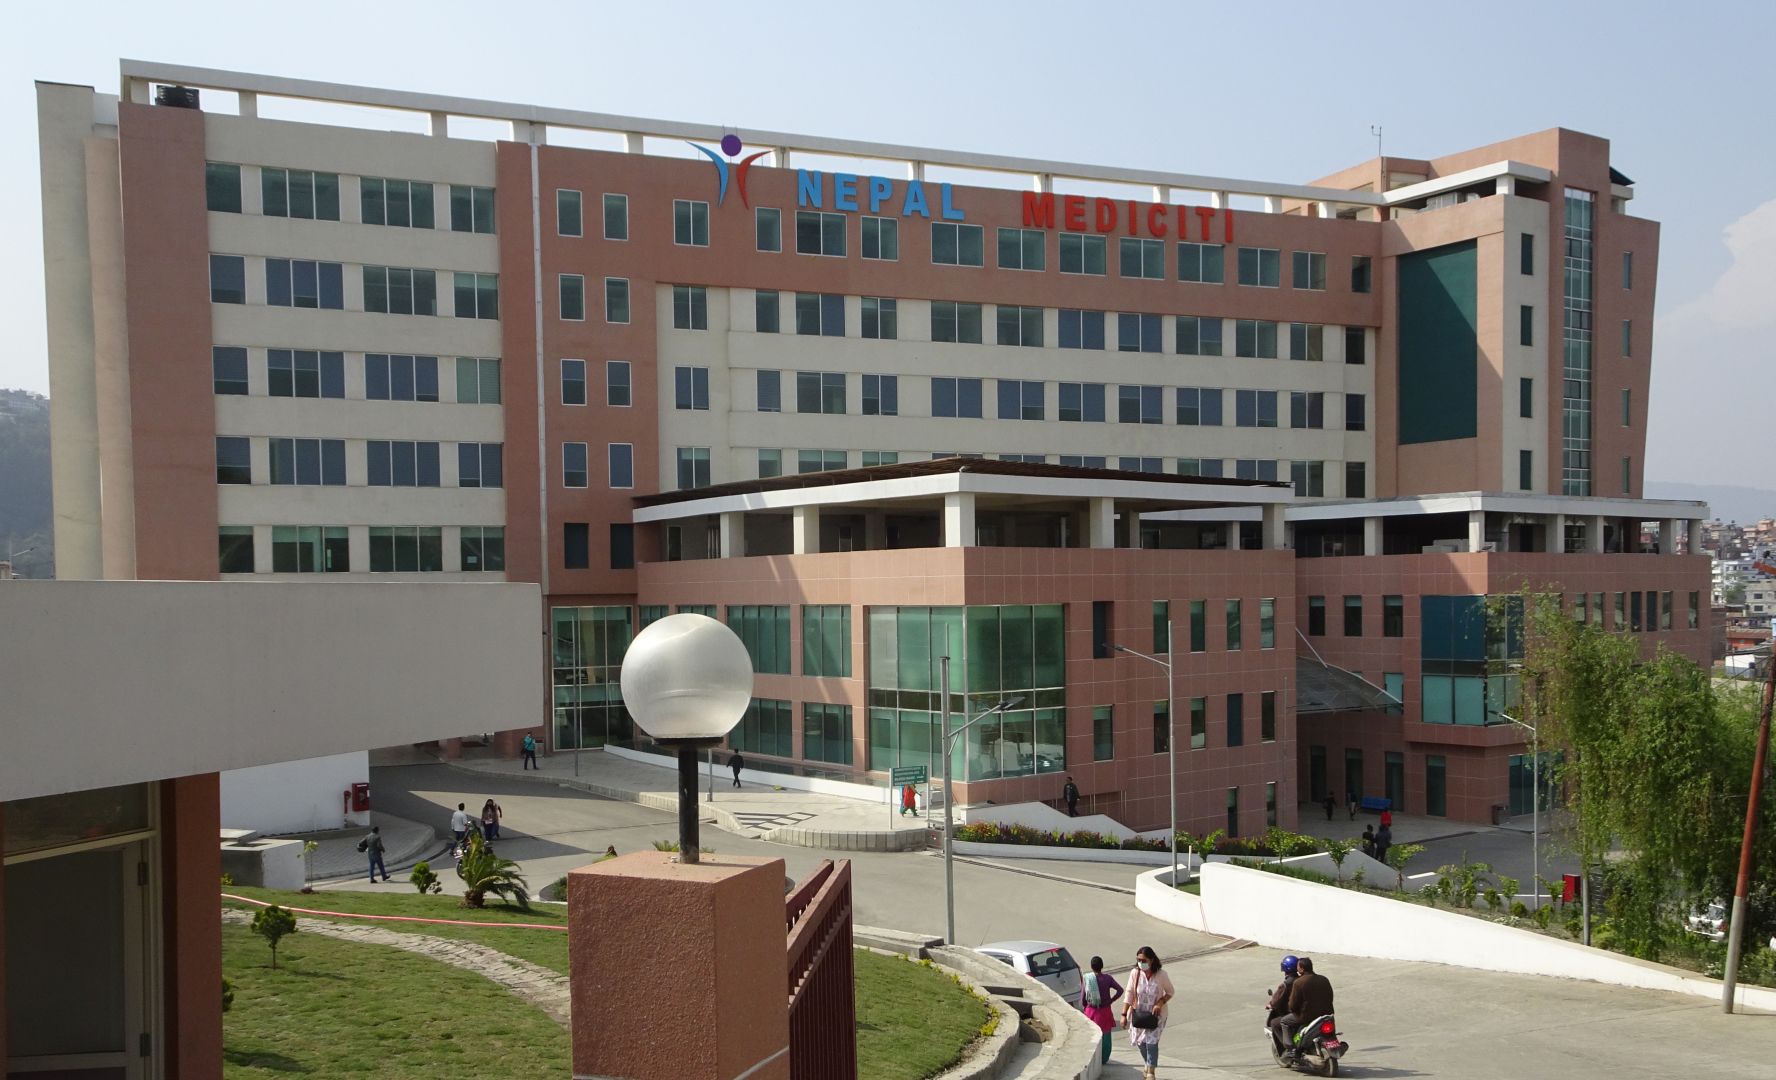 Nepal Mediciti Hospital Scandal: Billing department employees arrested in Massive Fraud Investigation